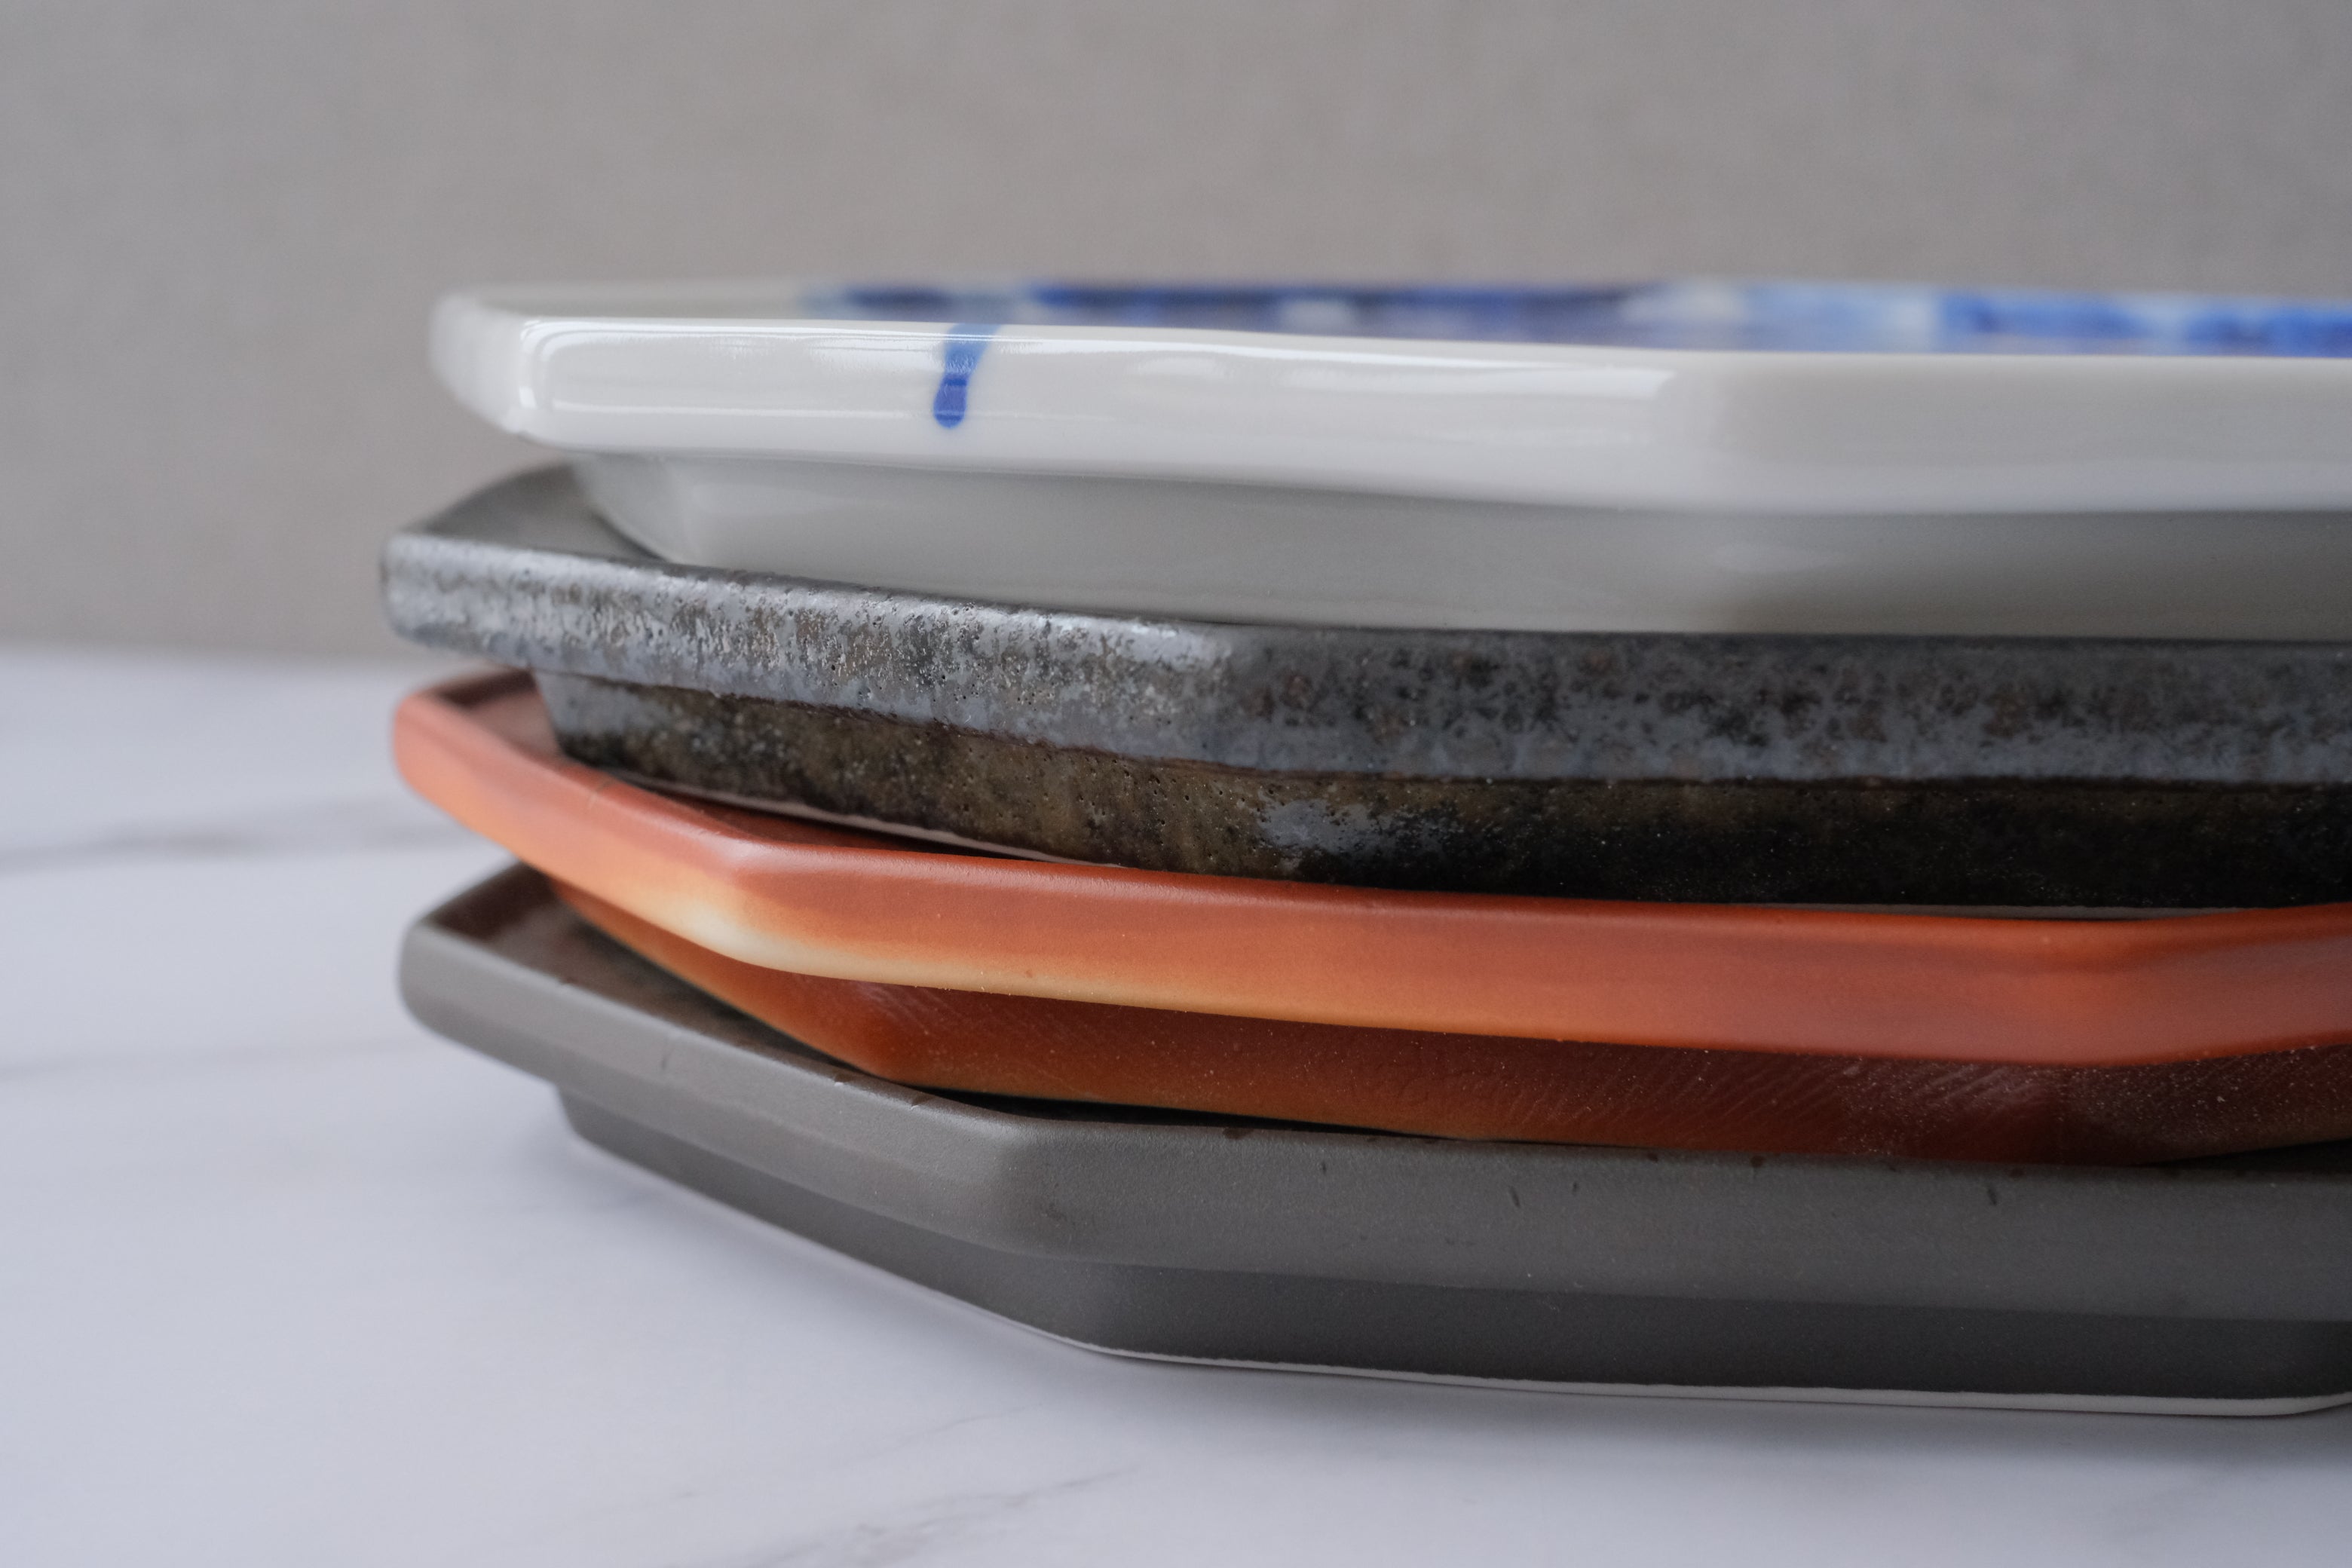 Minoyaki Textured Octagon Flat Serving Plate